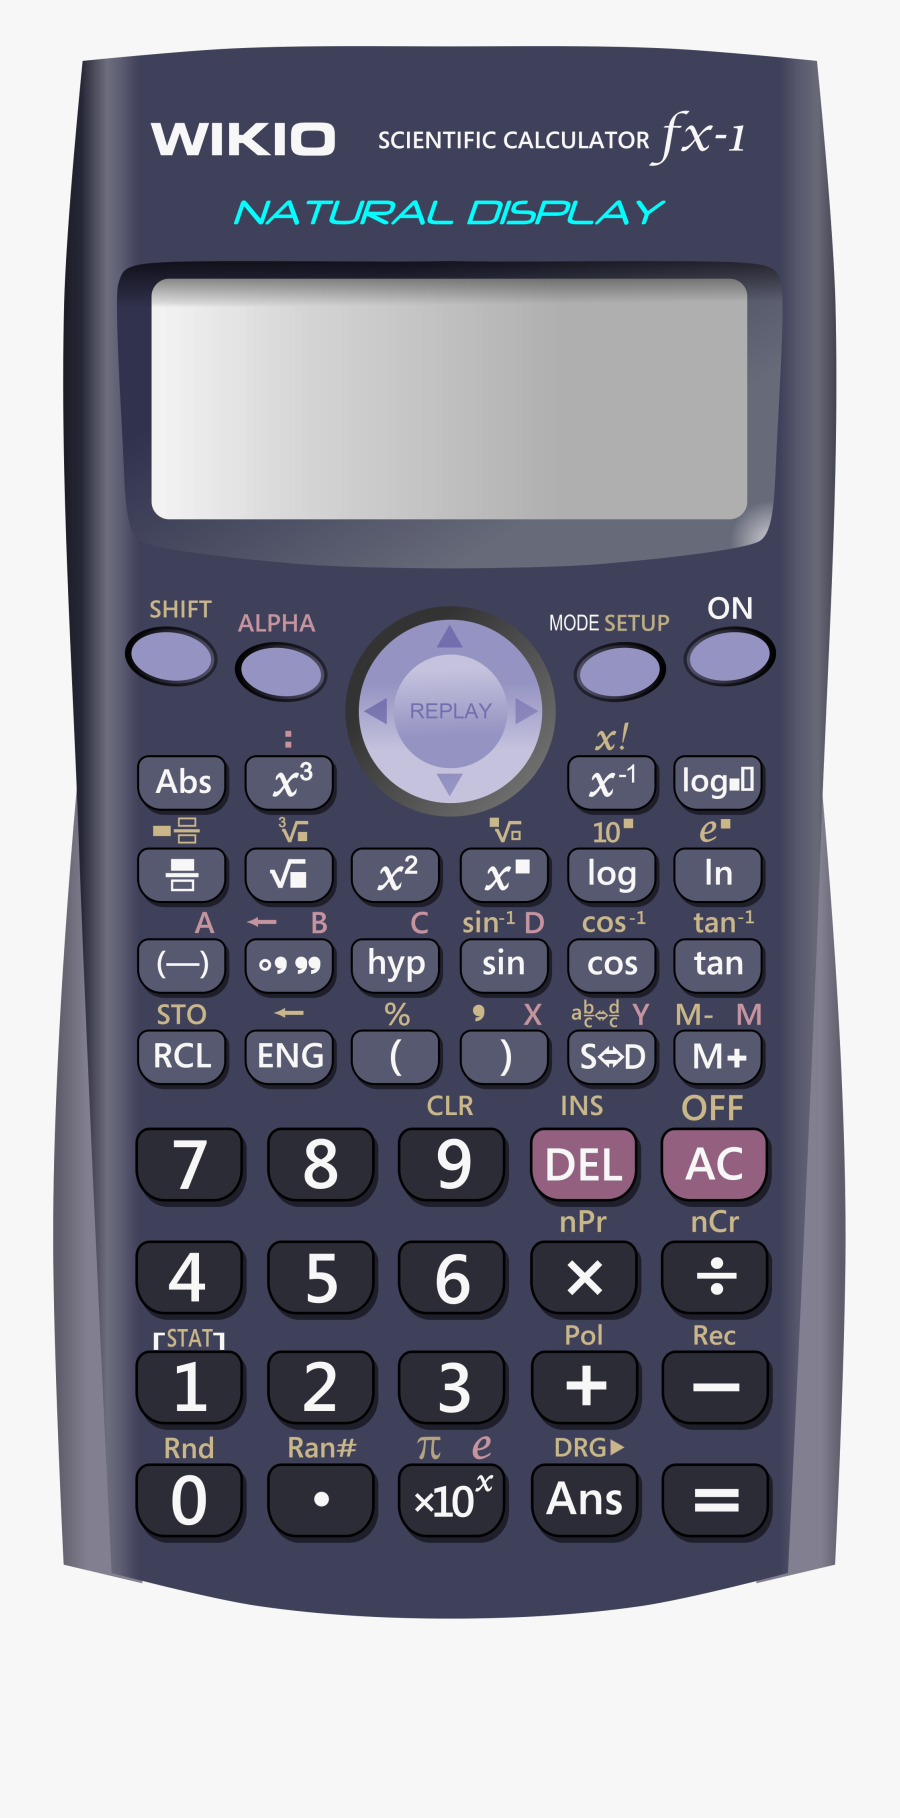 Calculator Png Free Image Download - Calculadora Casio Fx 85ms, Transparent Clipart